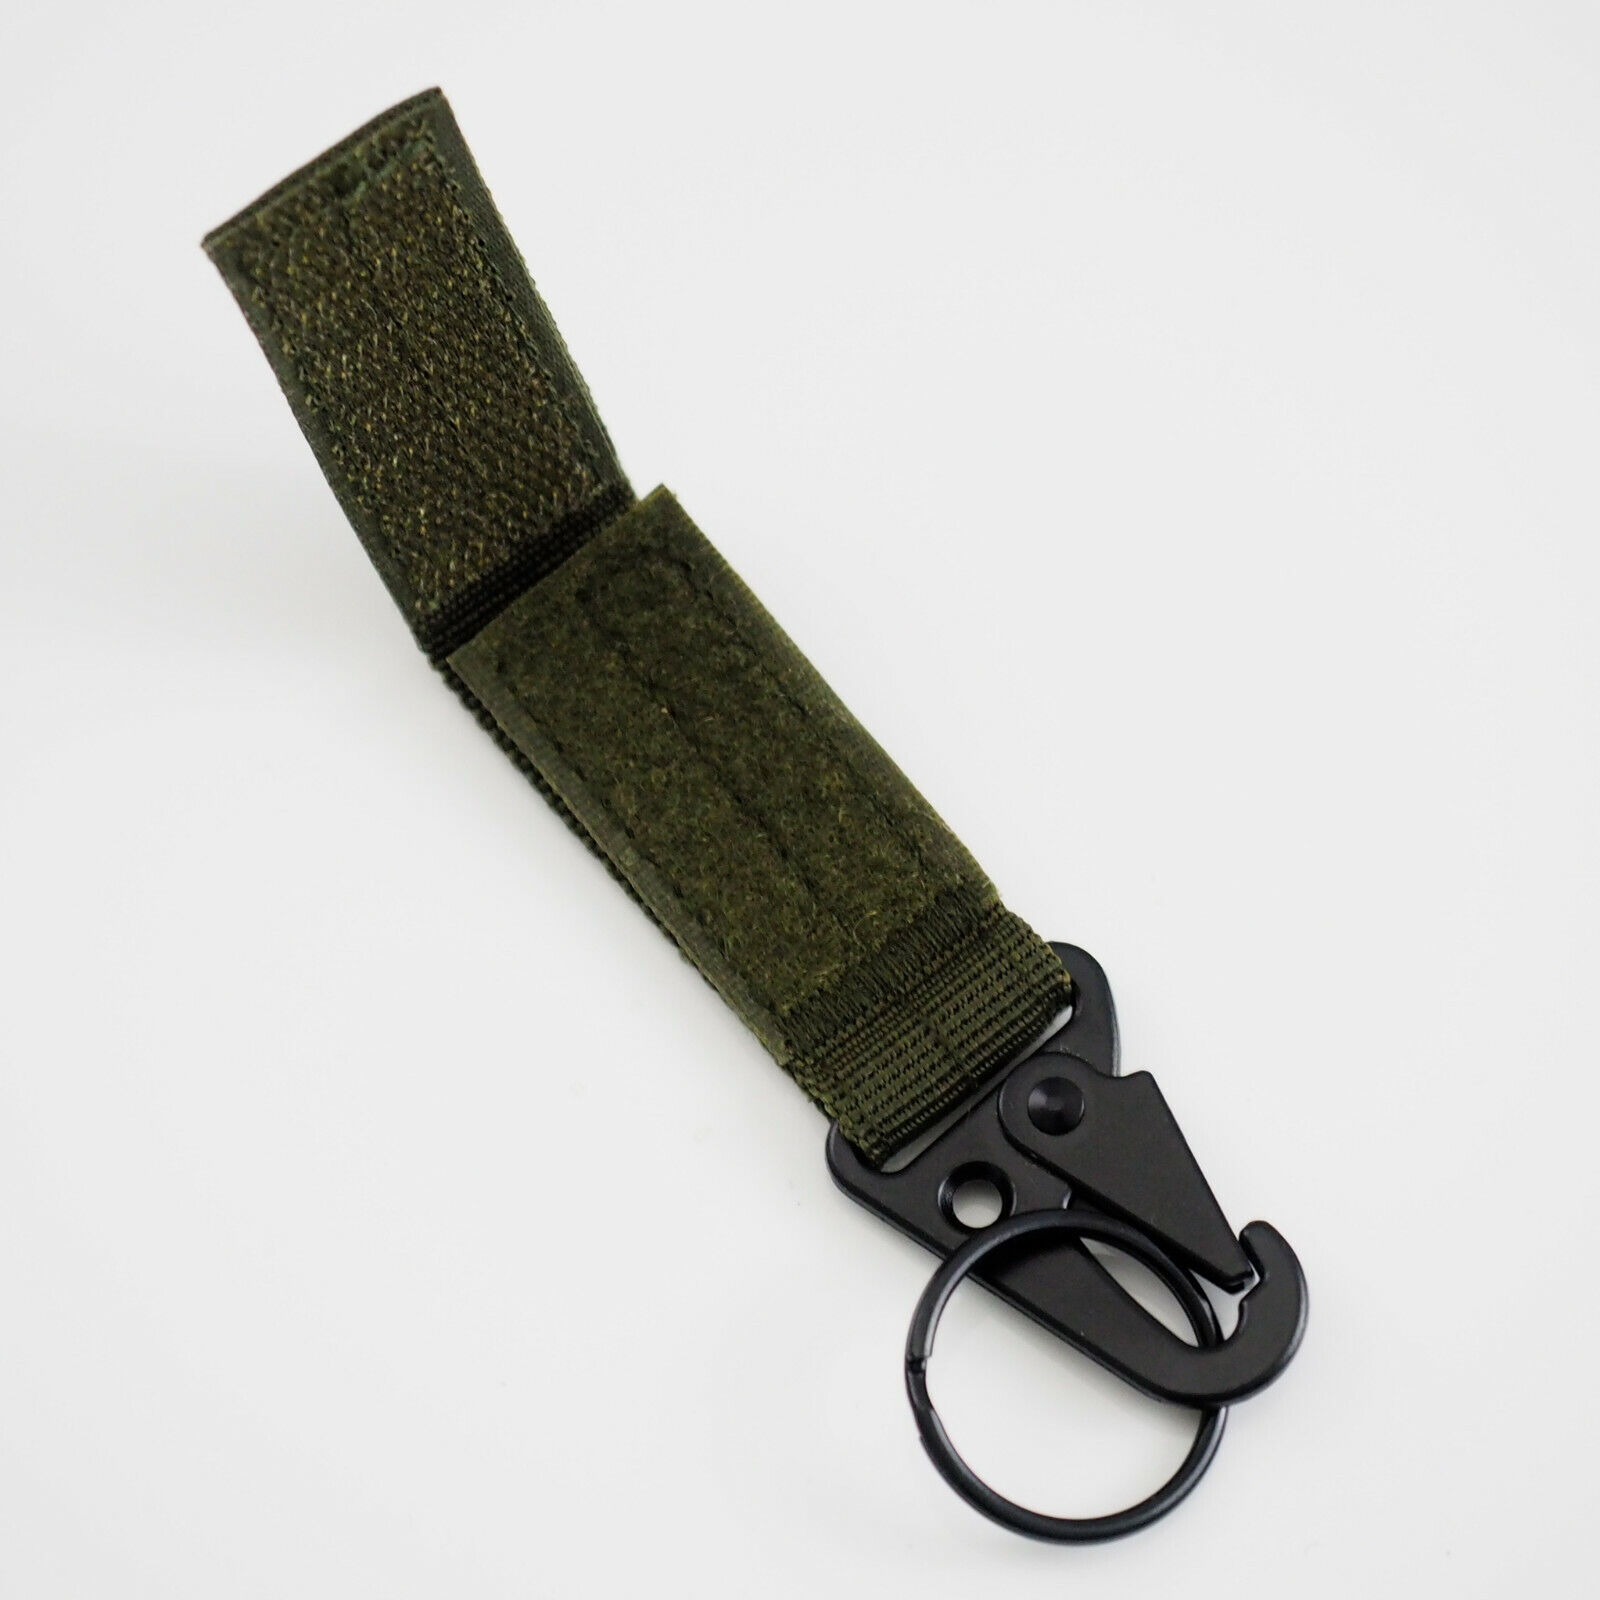 10pcs Green Molle Tactical Carabiner Backpack Belt Hook Quickdraw EDC Nylon Clip